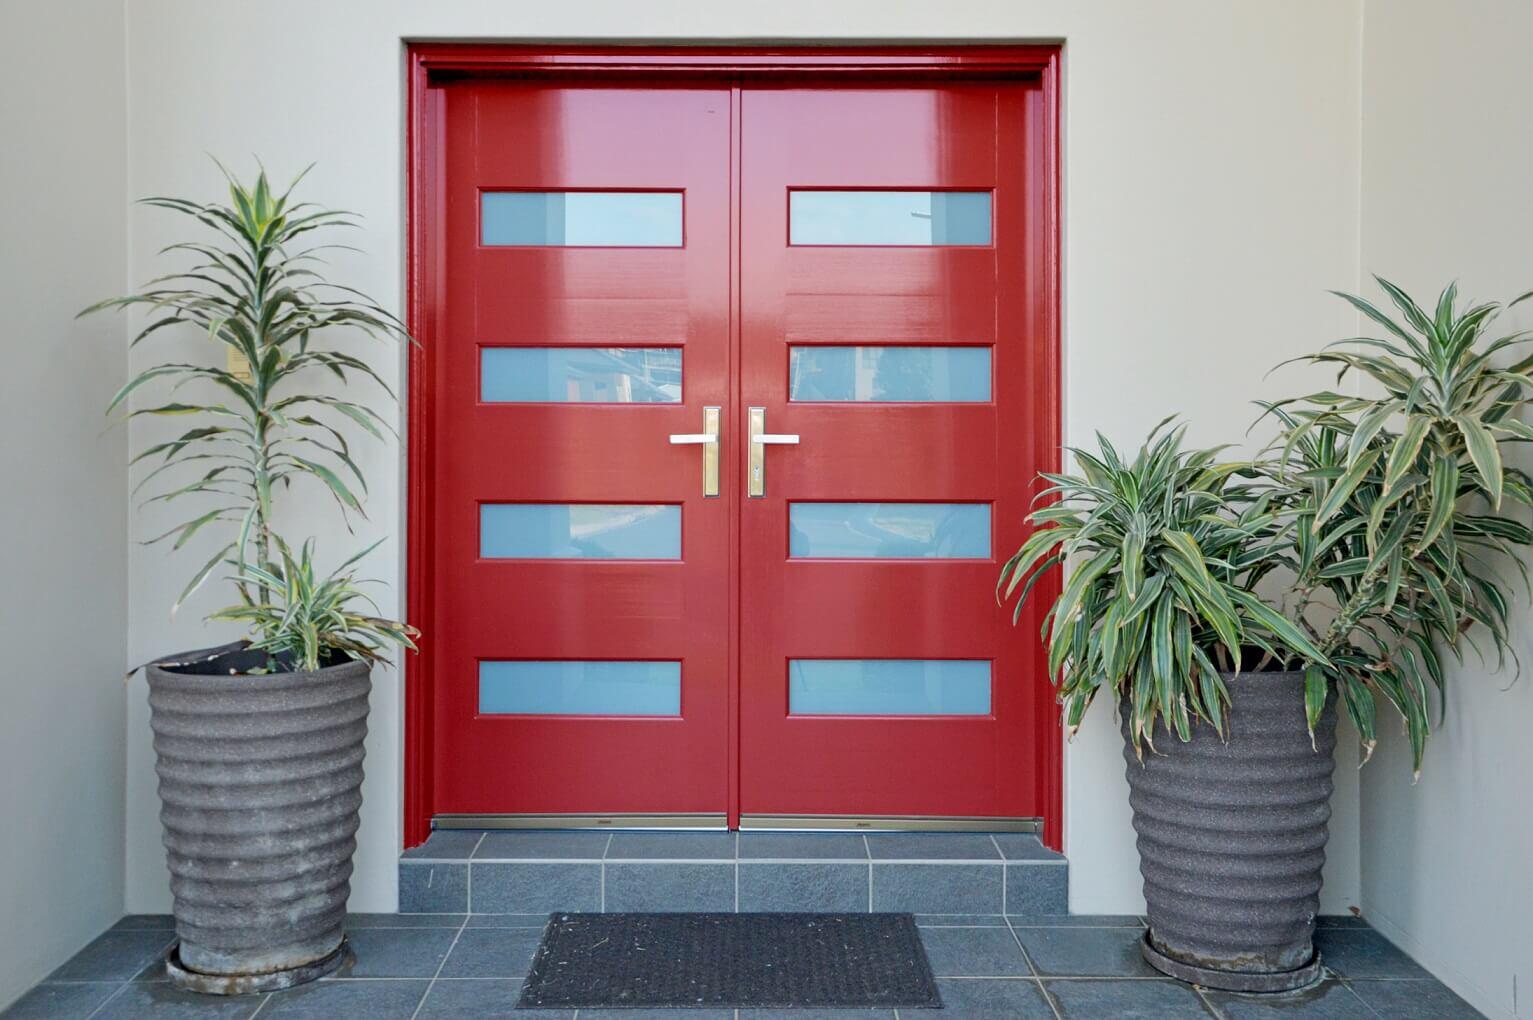 What's a Red Door's Meaning? Symbolism of Red-Door Houses